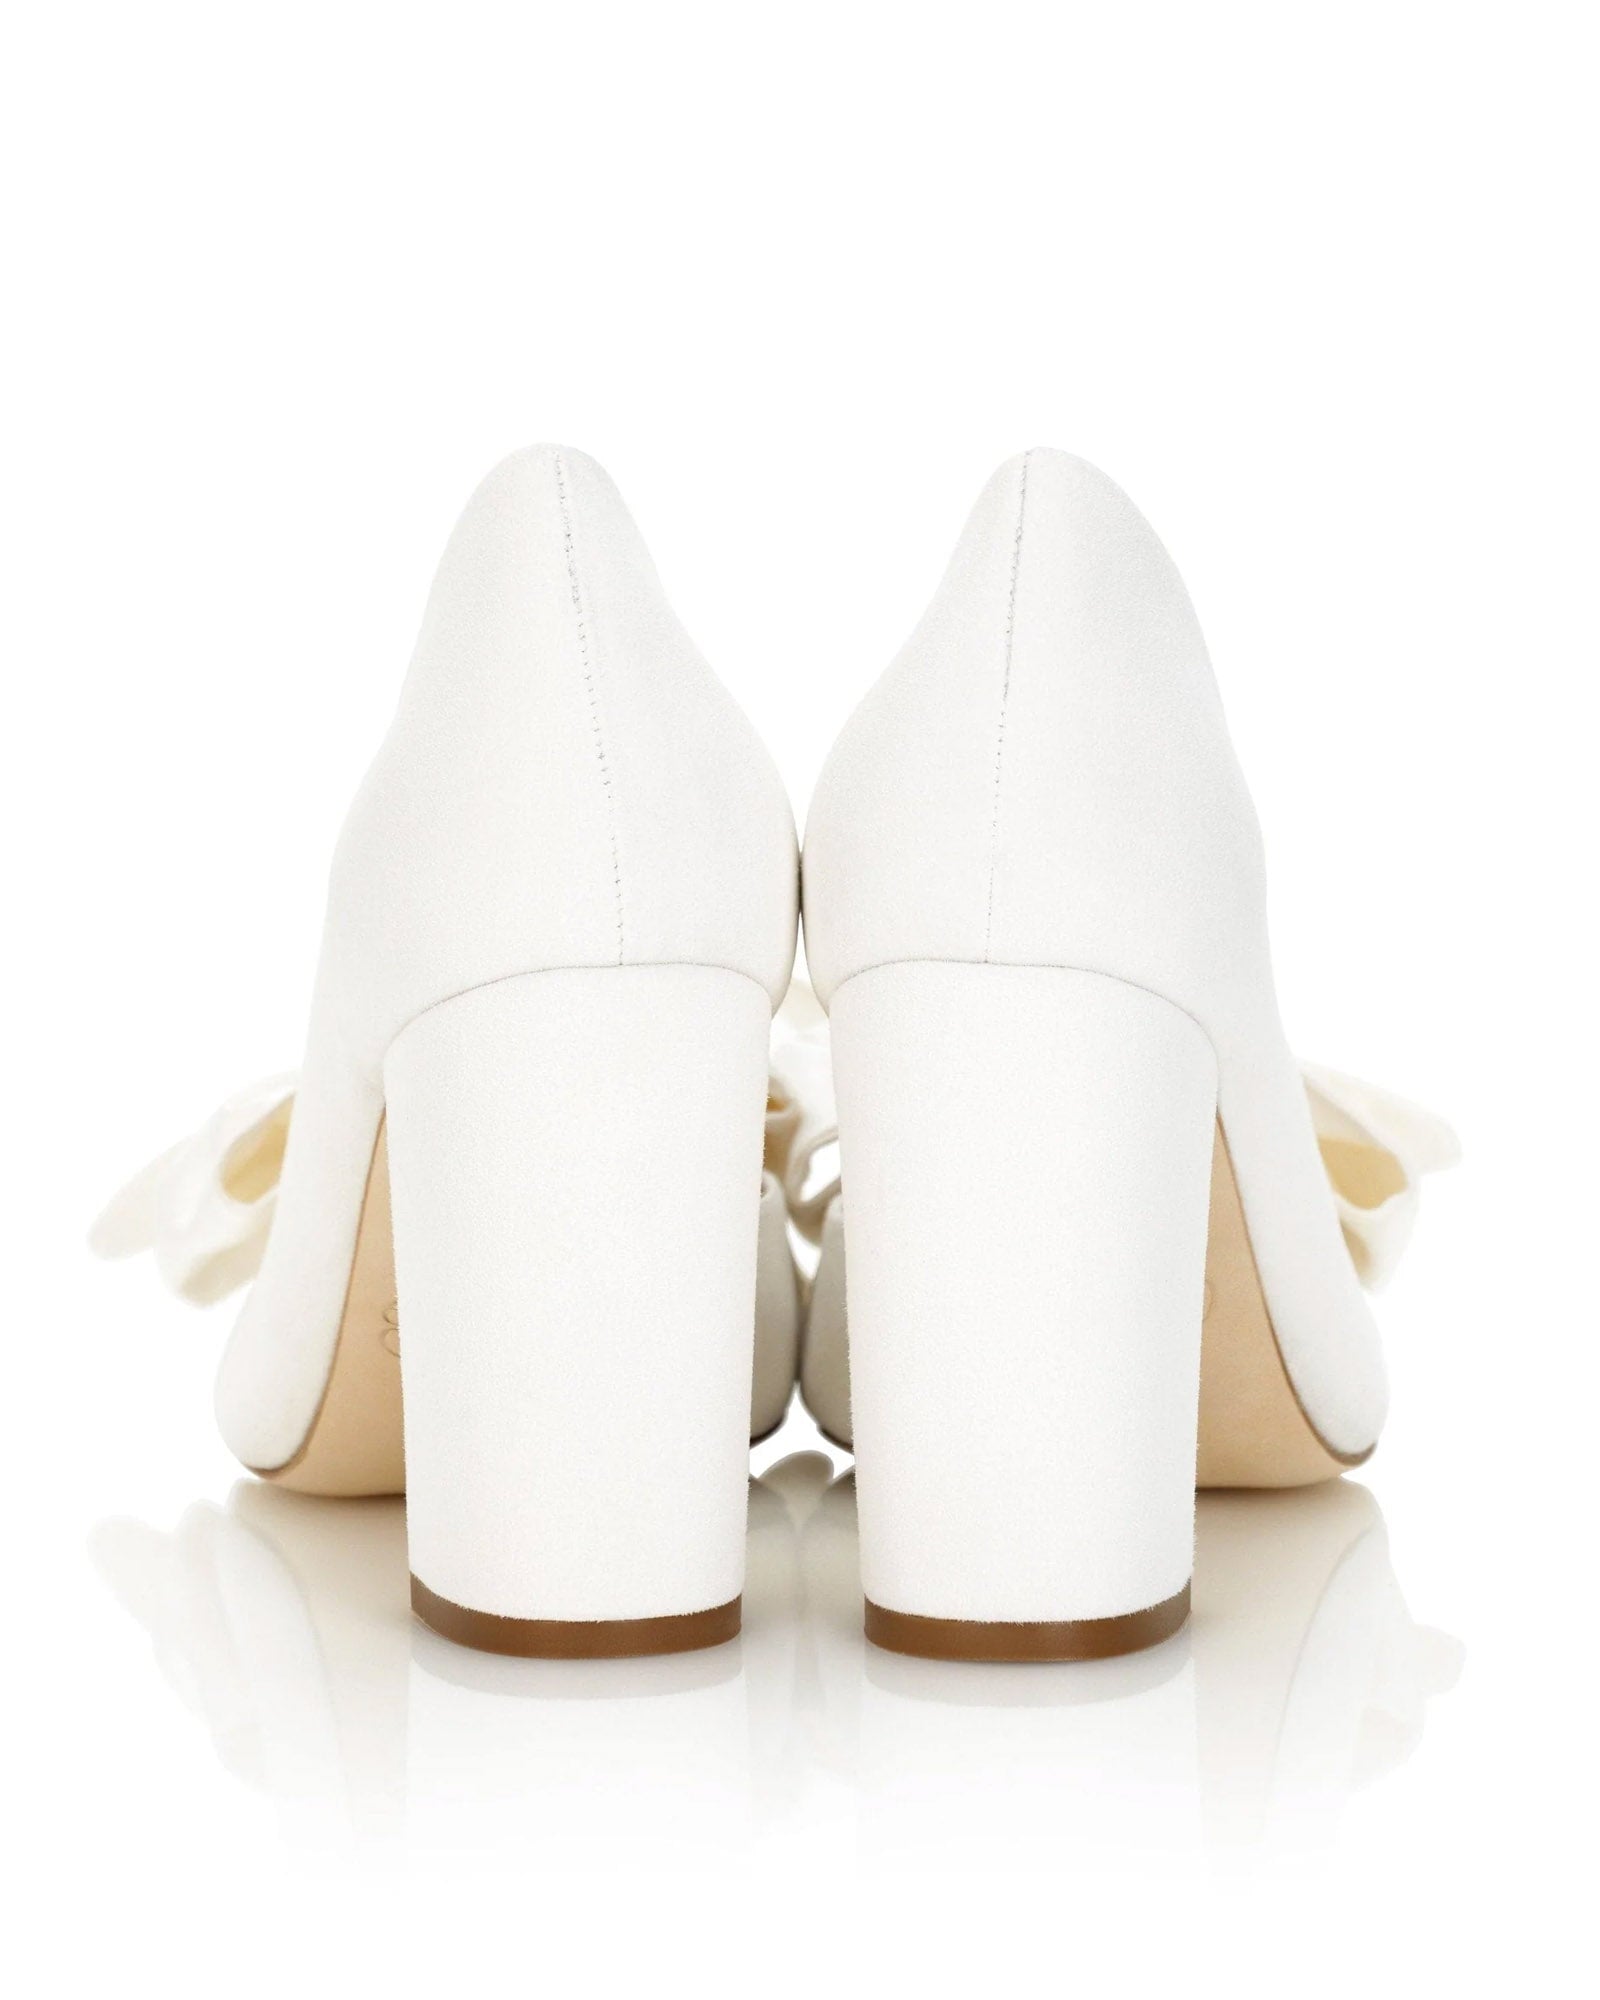 Florence Block Ivory Bridal Shoe Bridal Shoes with Satin Bows  image